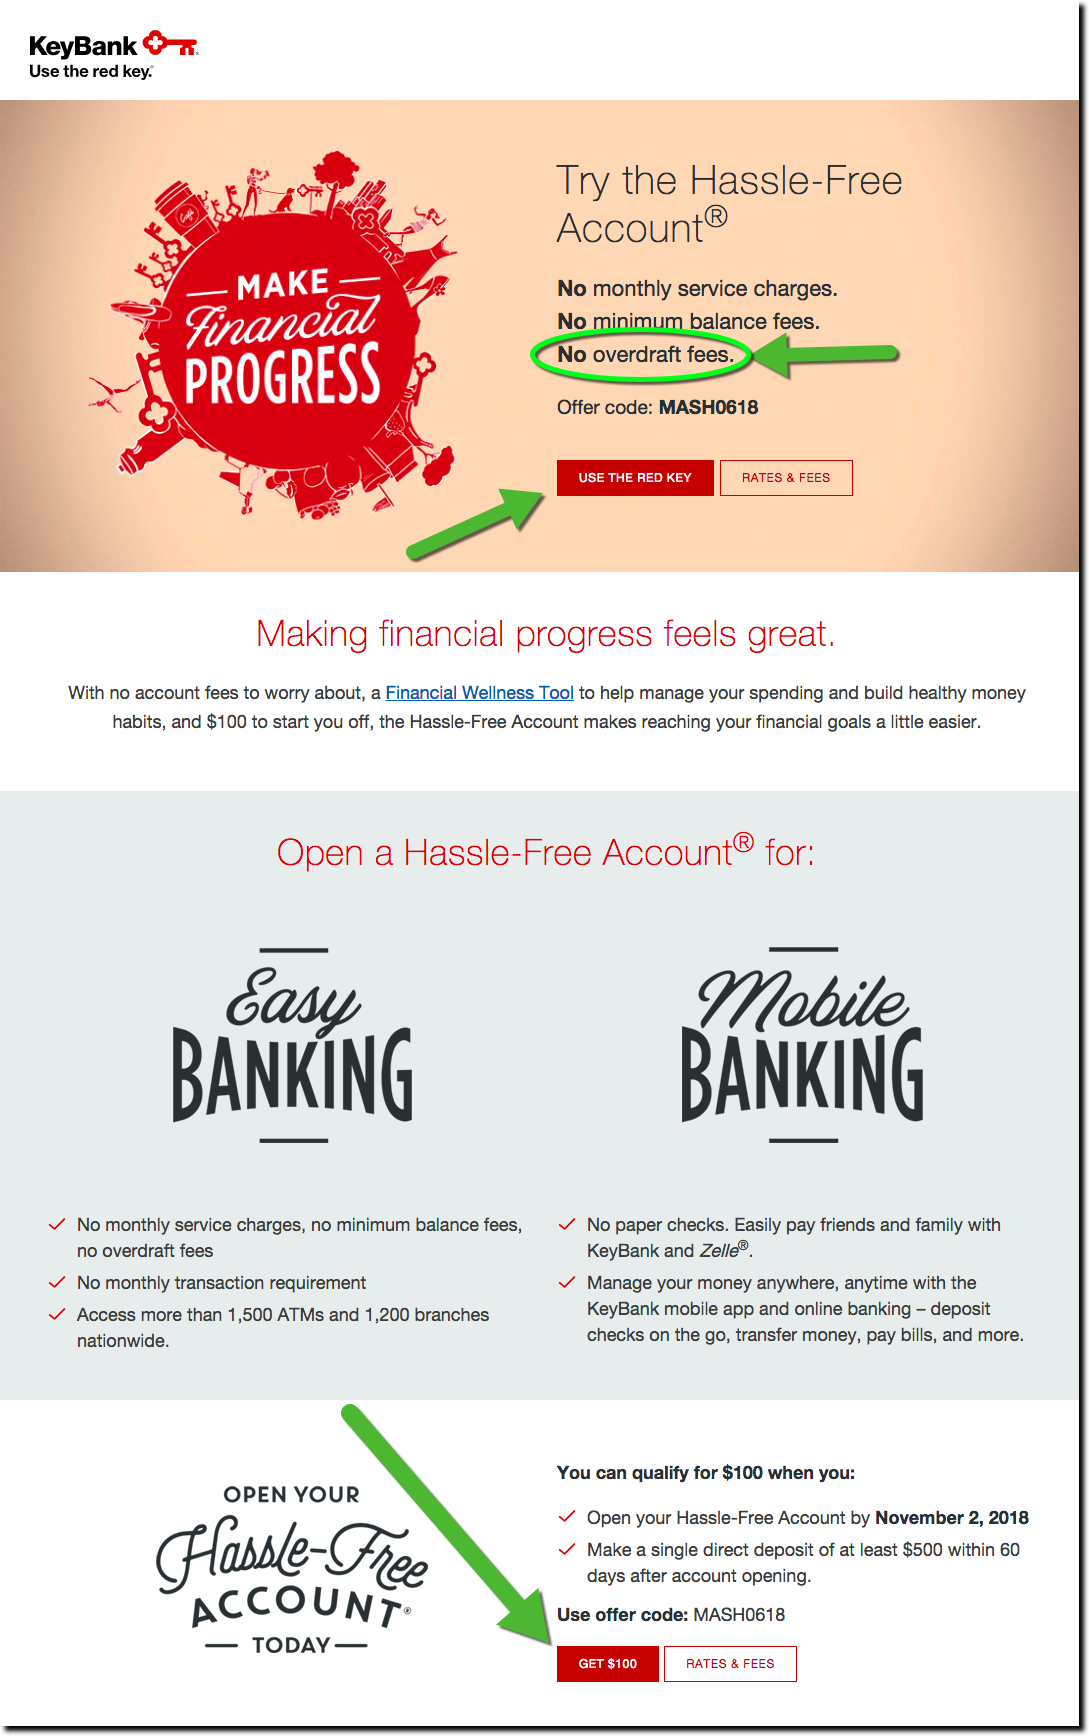 Marketing UX: Key Bank’s $100 Checking Promotion Landing Page